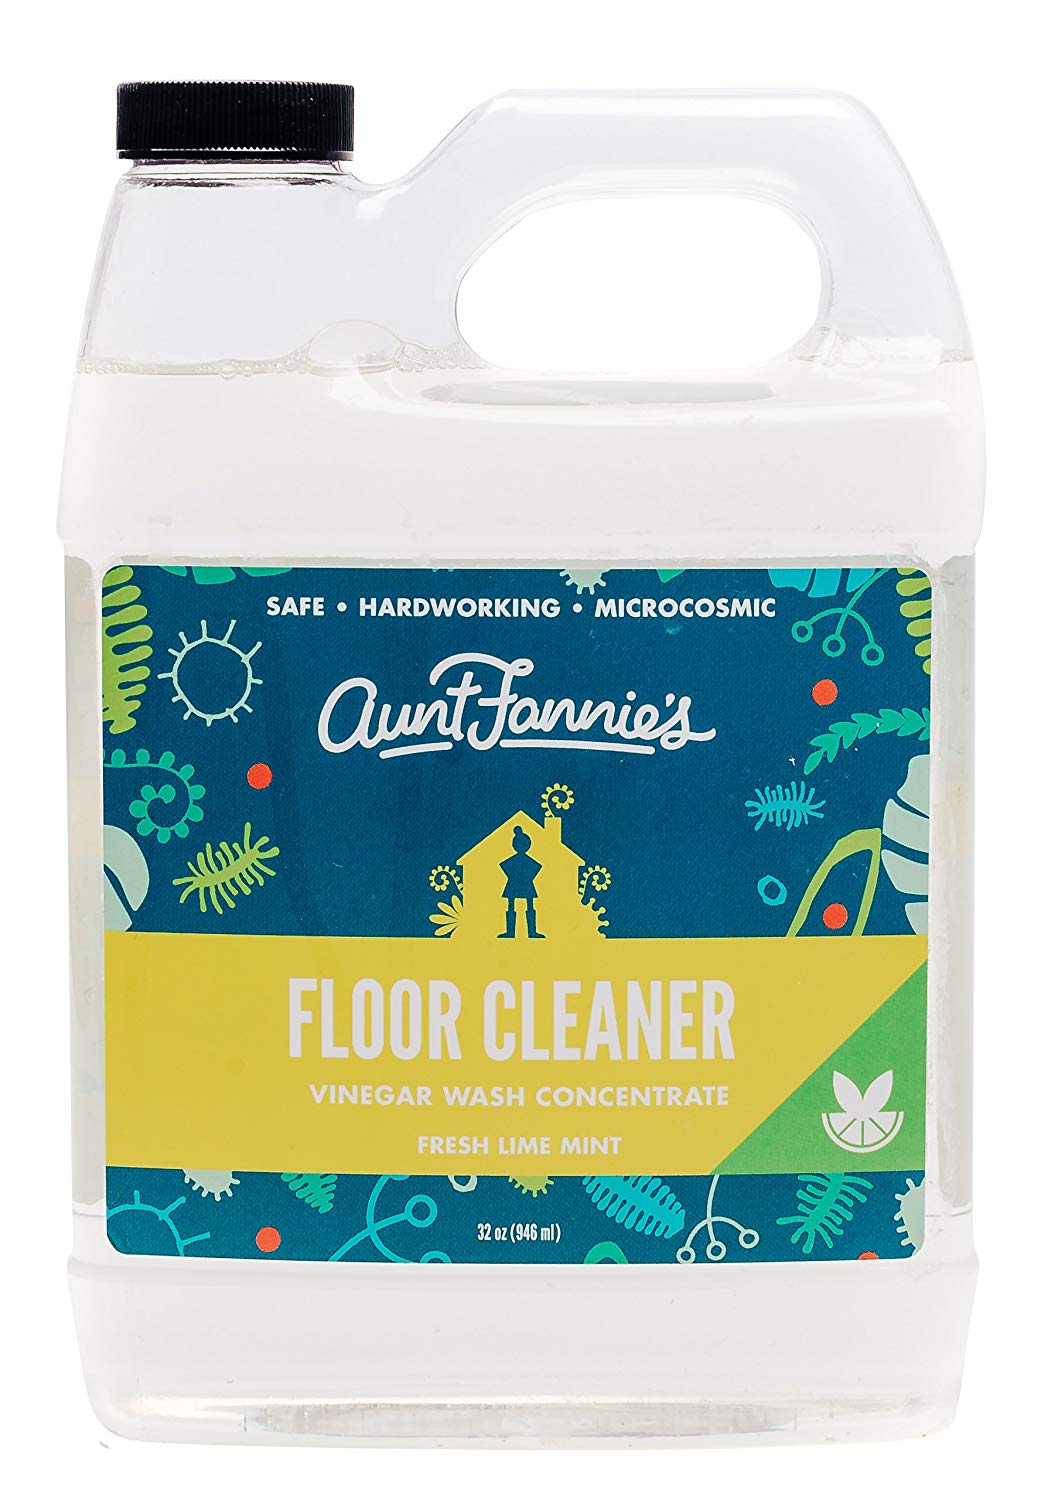 vinegar-based floor cleaner product